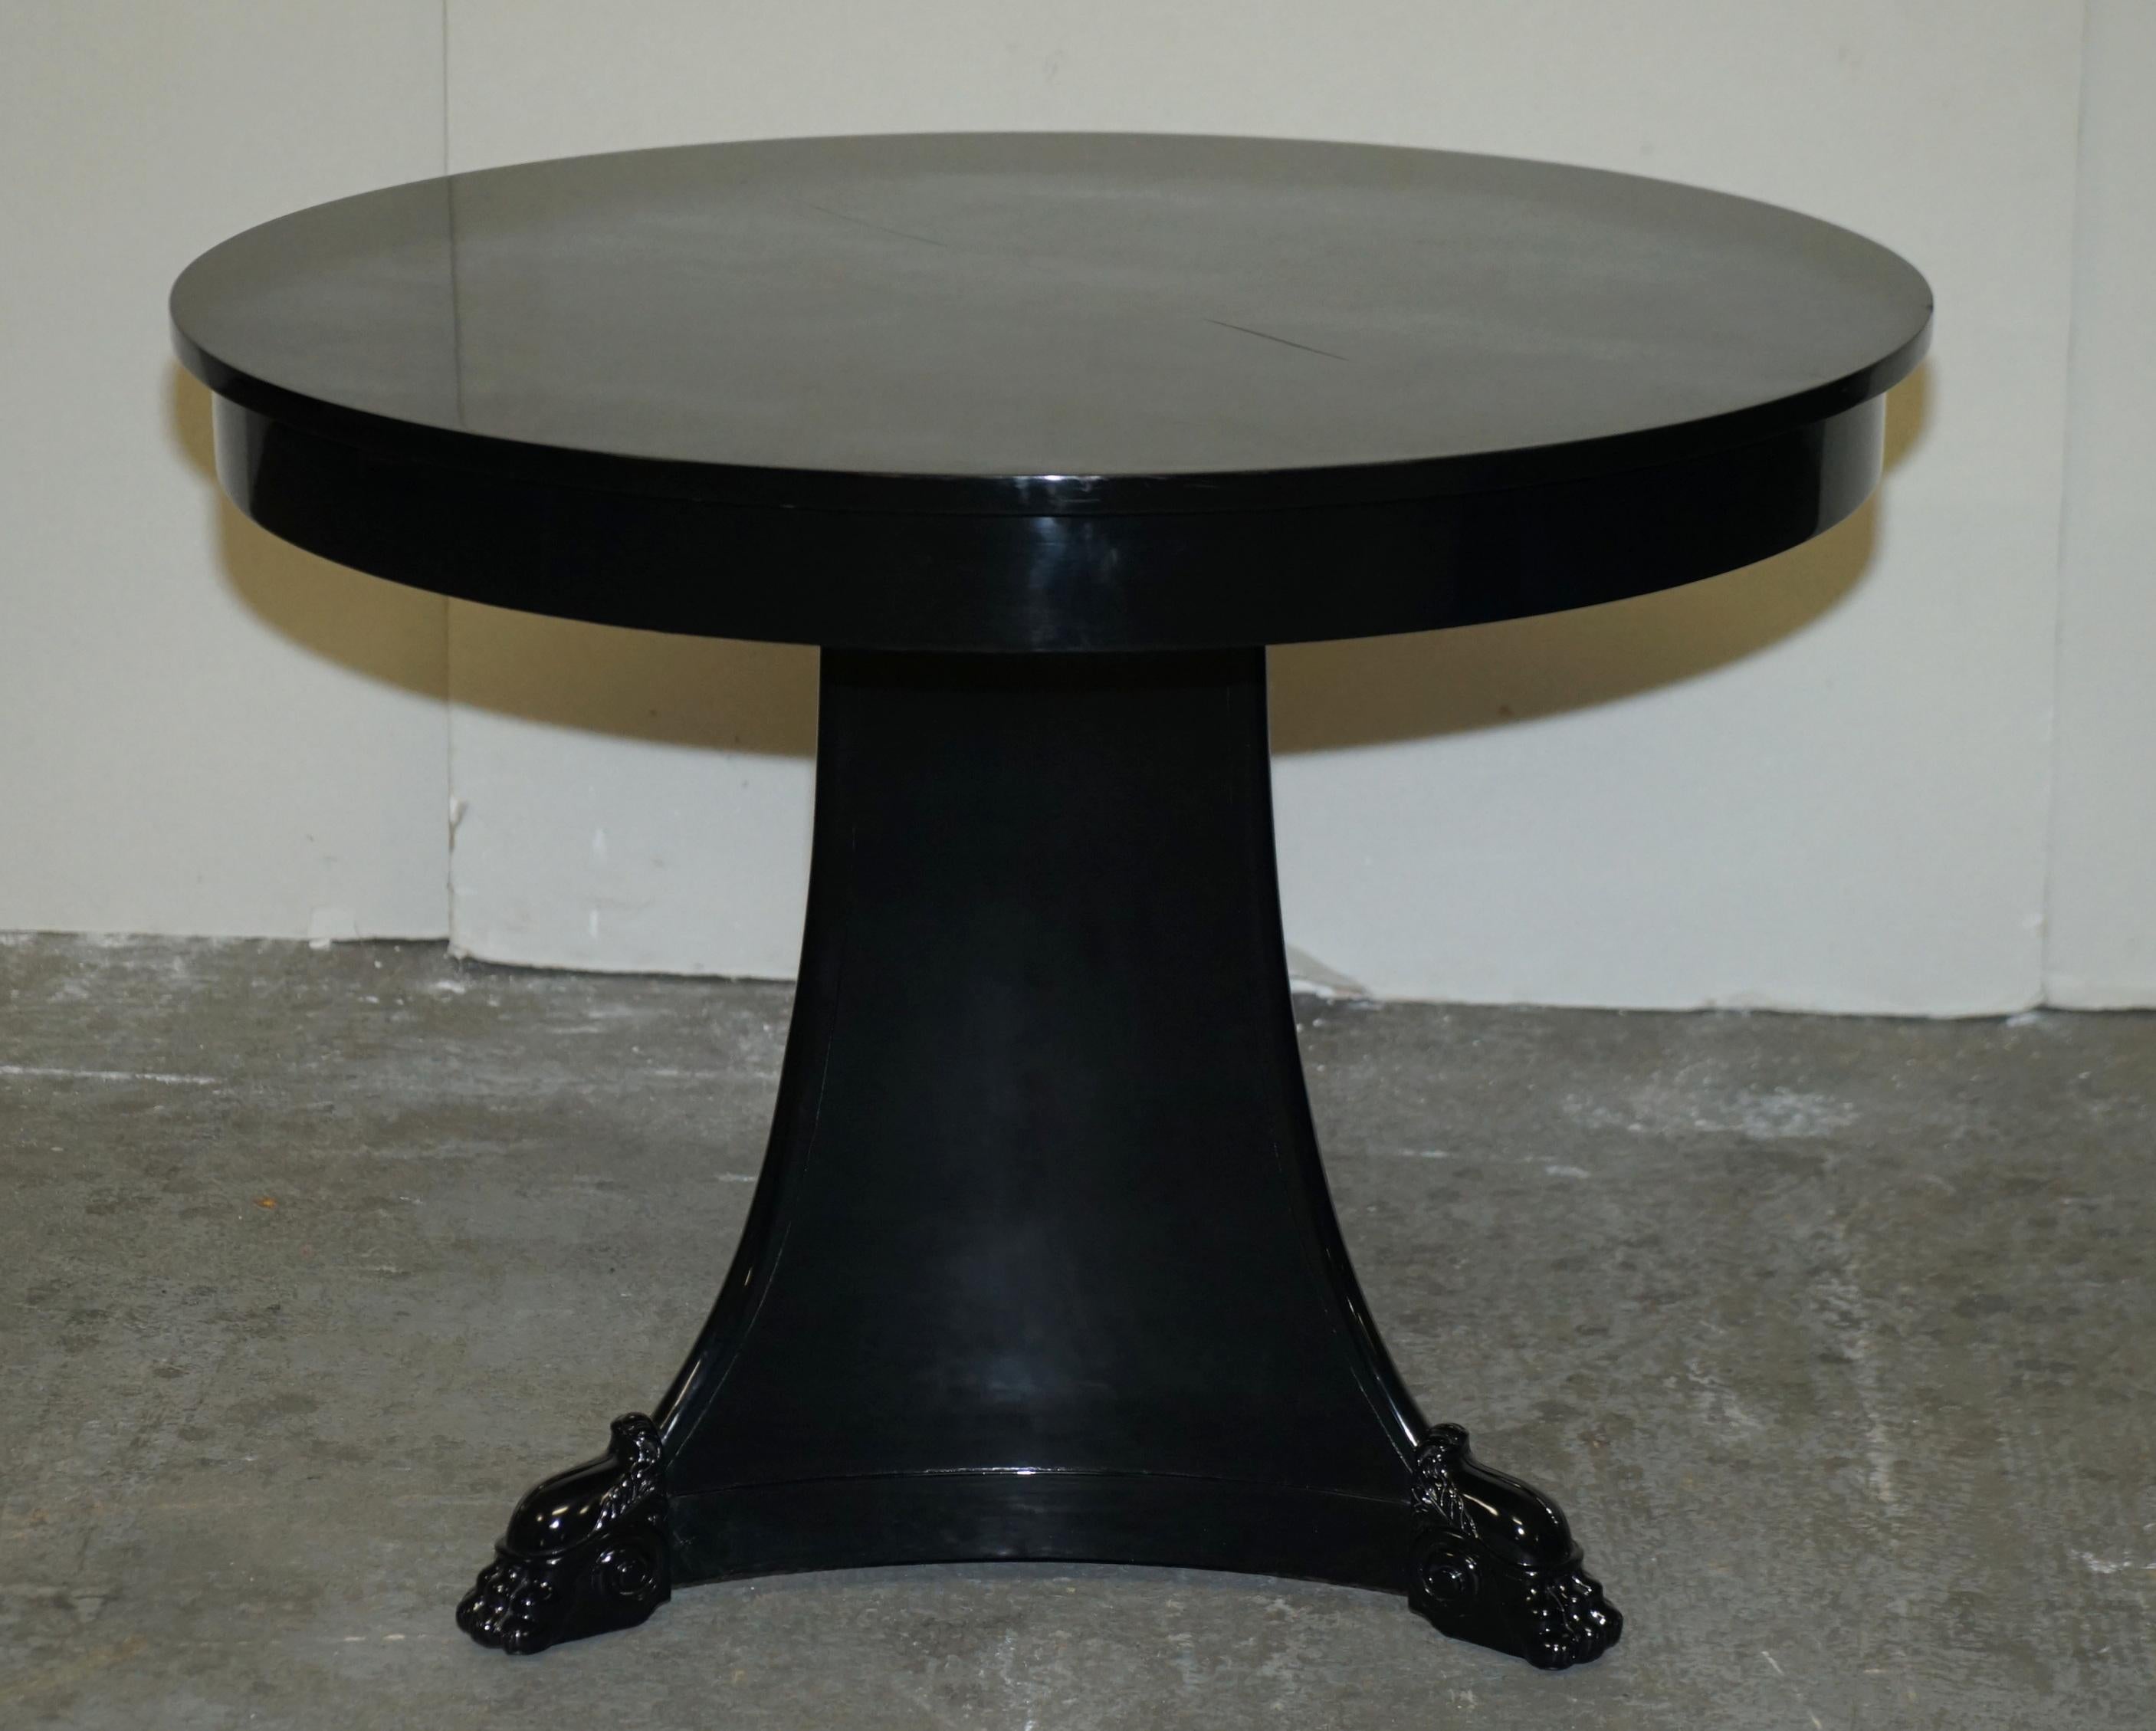 ralph lauren round dining table